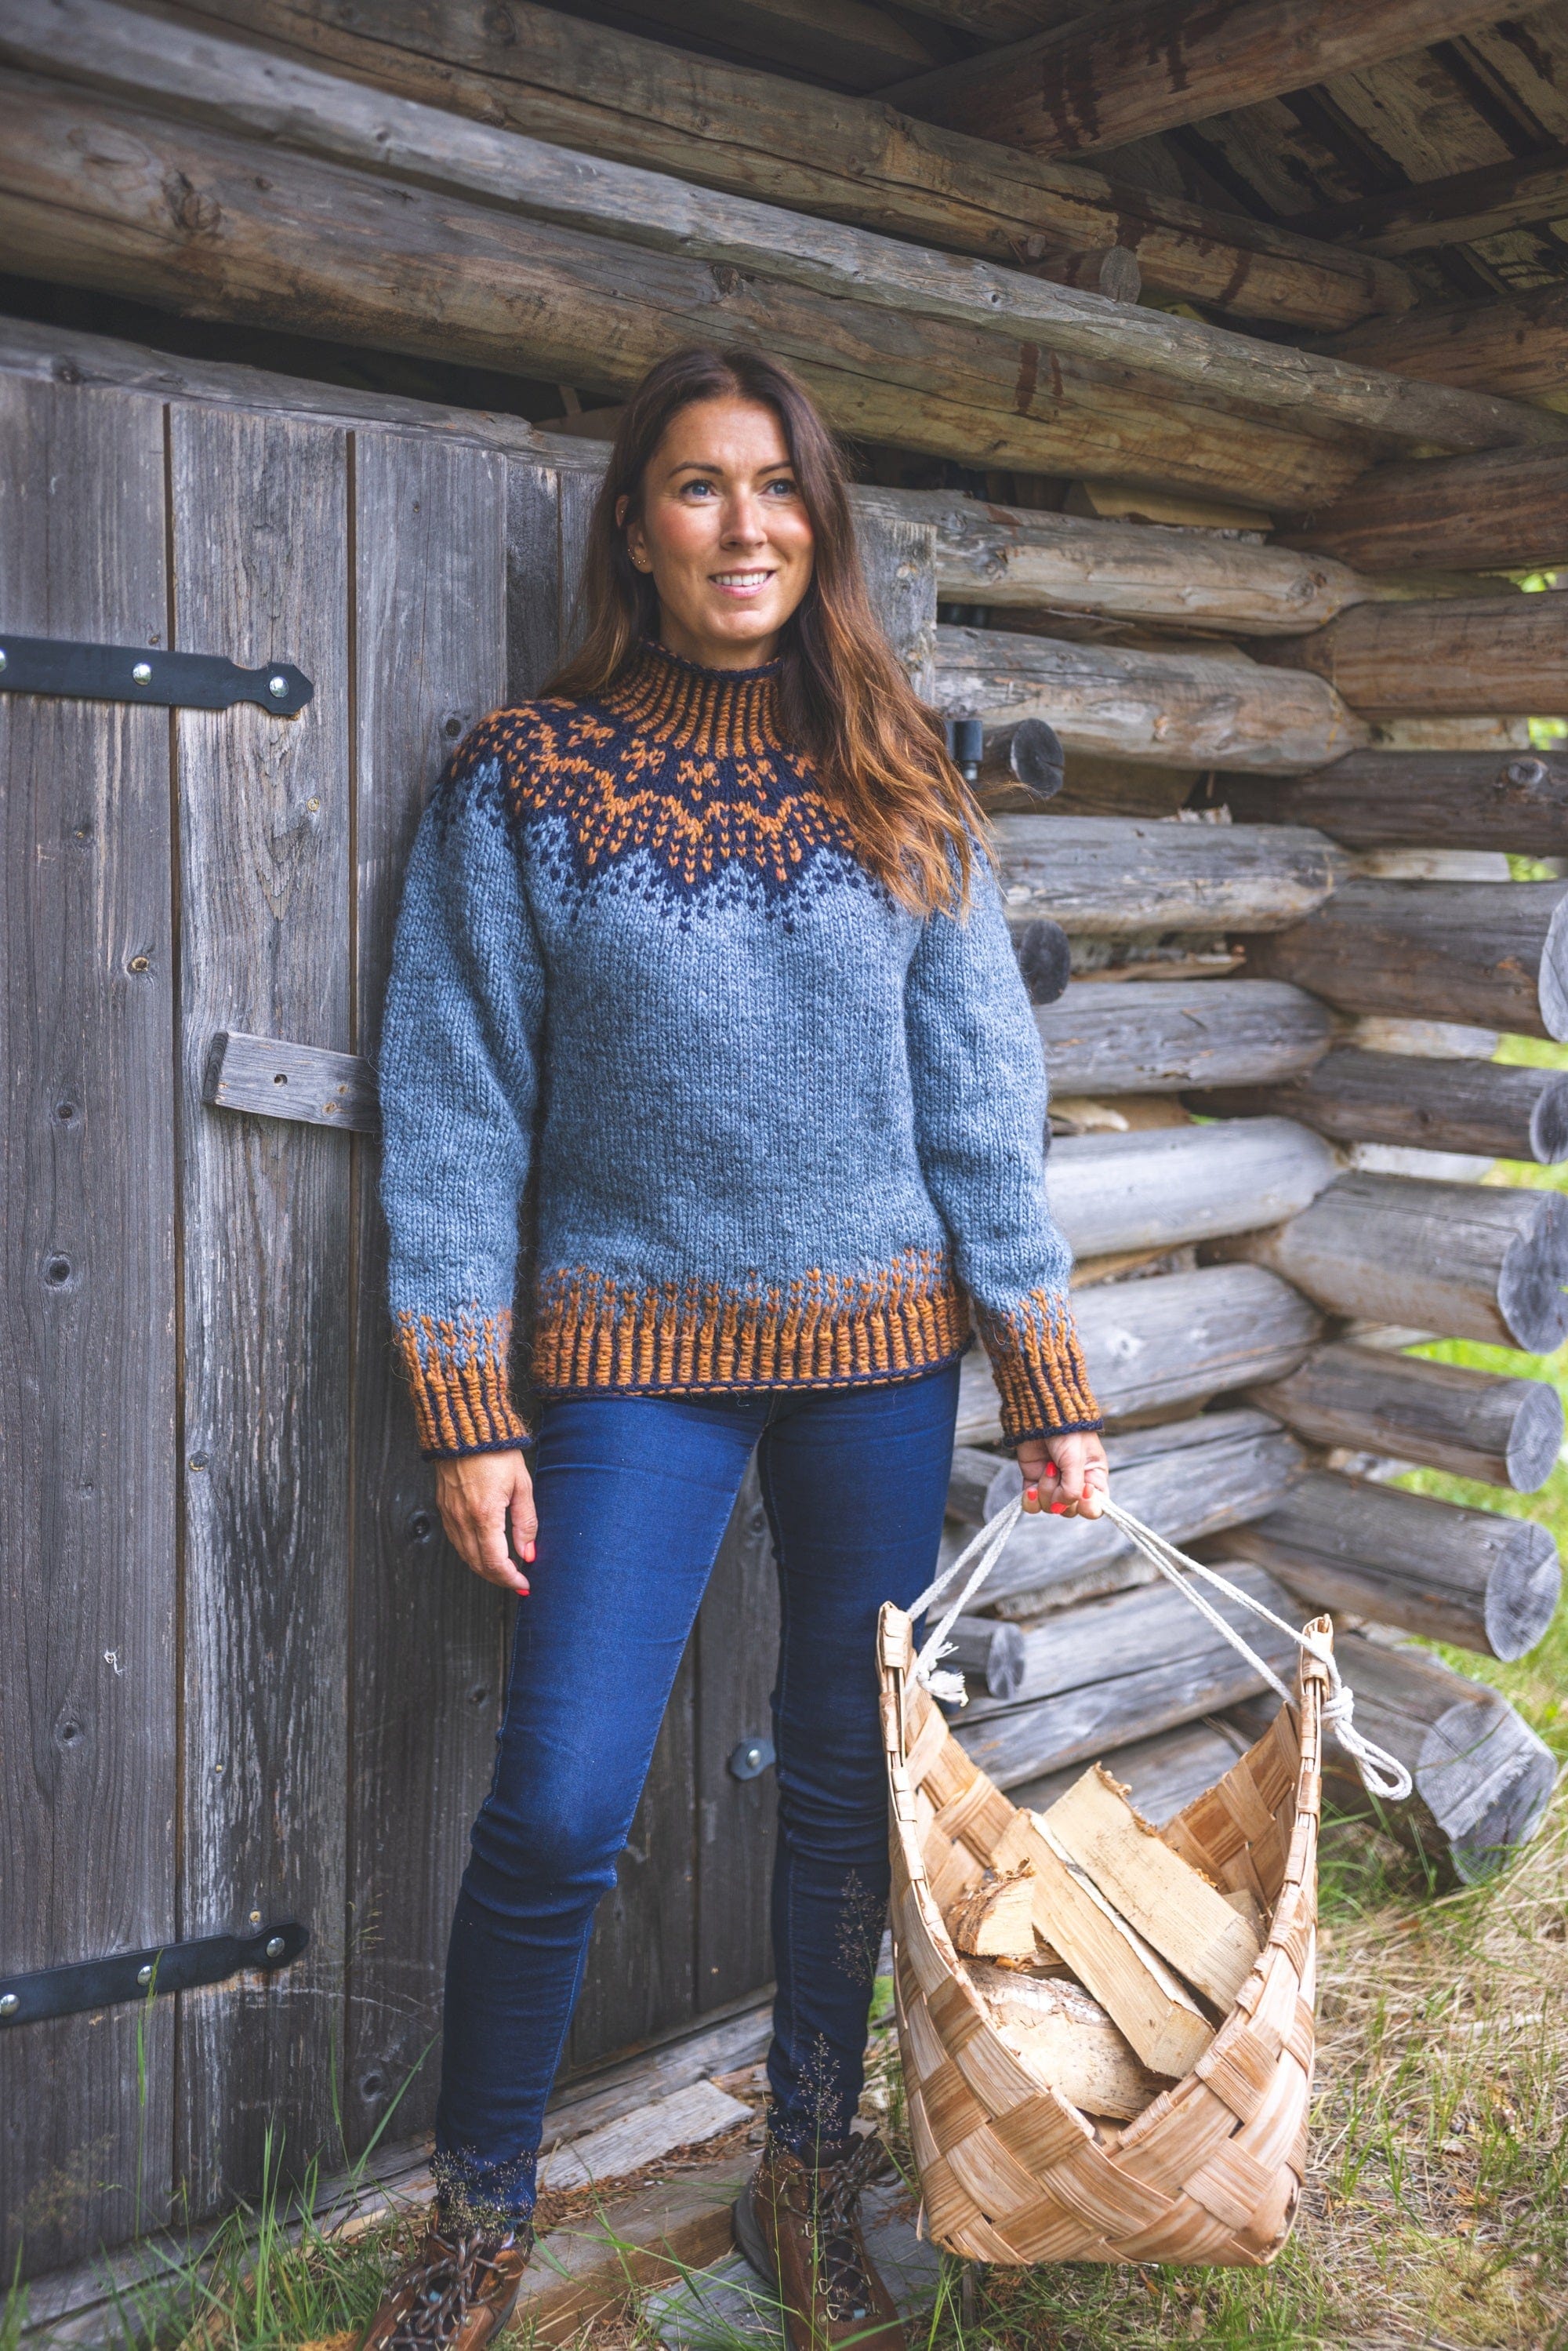 Merineule Blue - Wool sweater knitting kit - The Icelandic Store